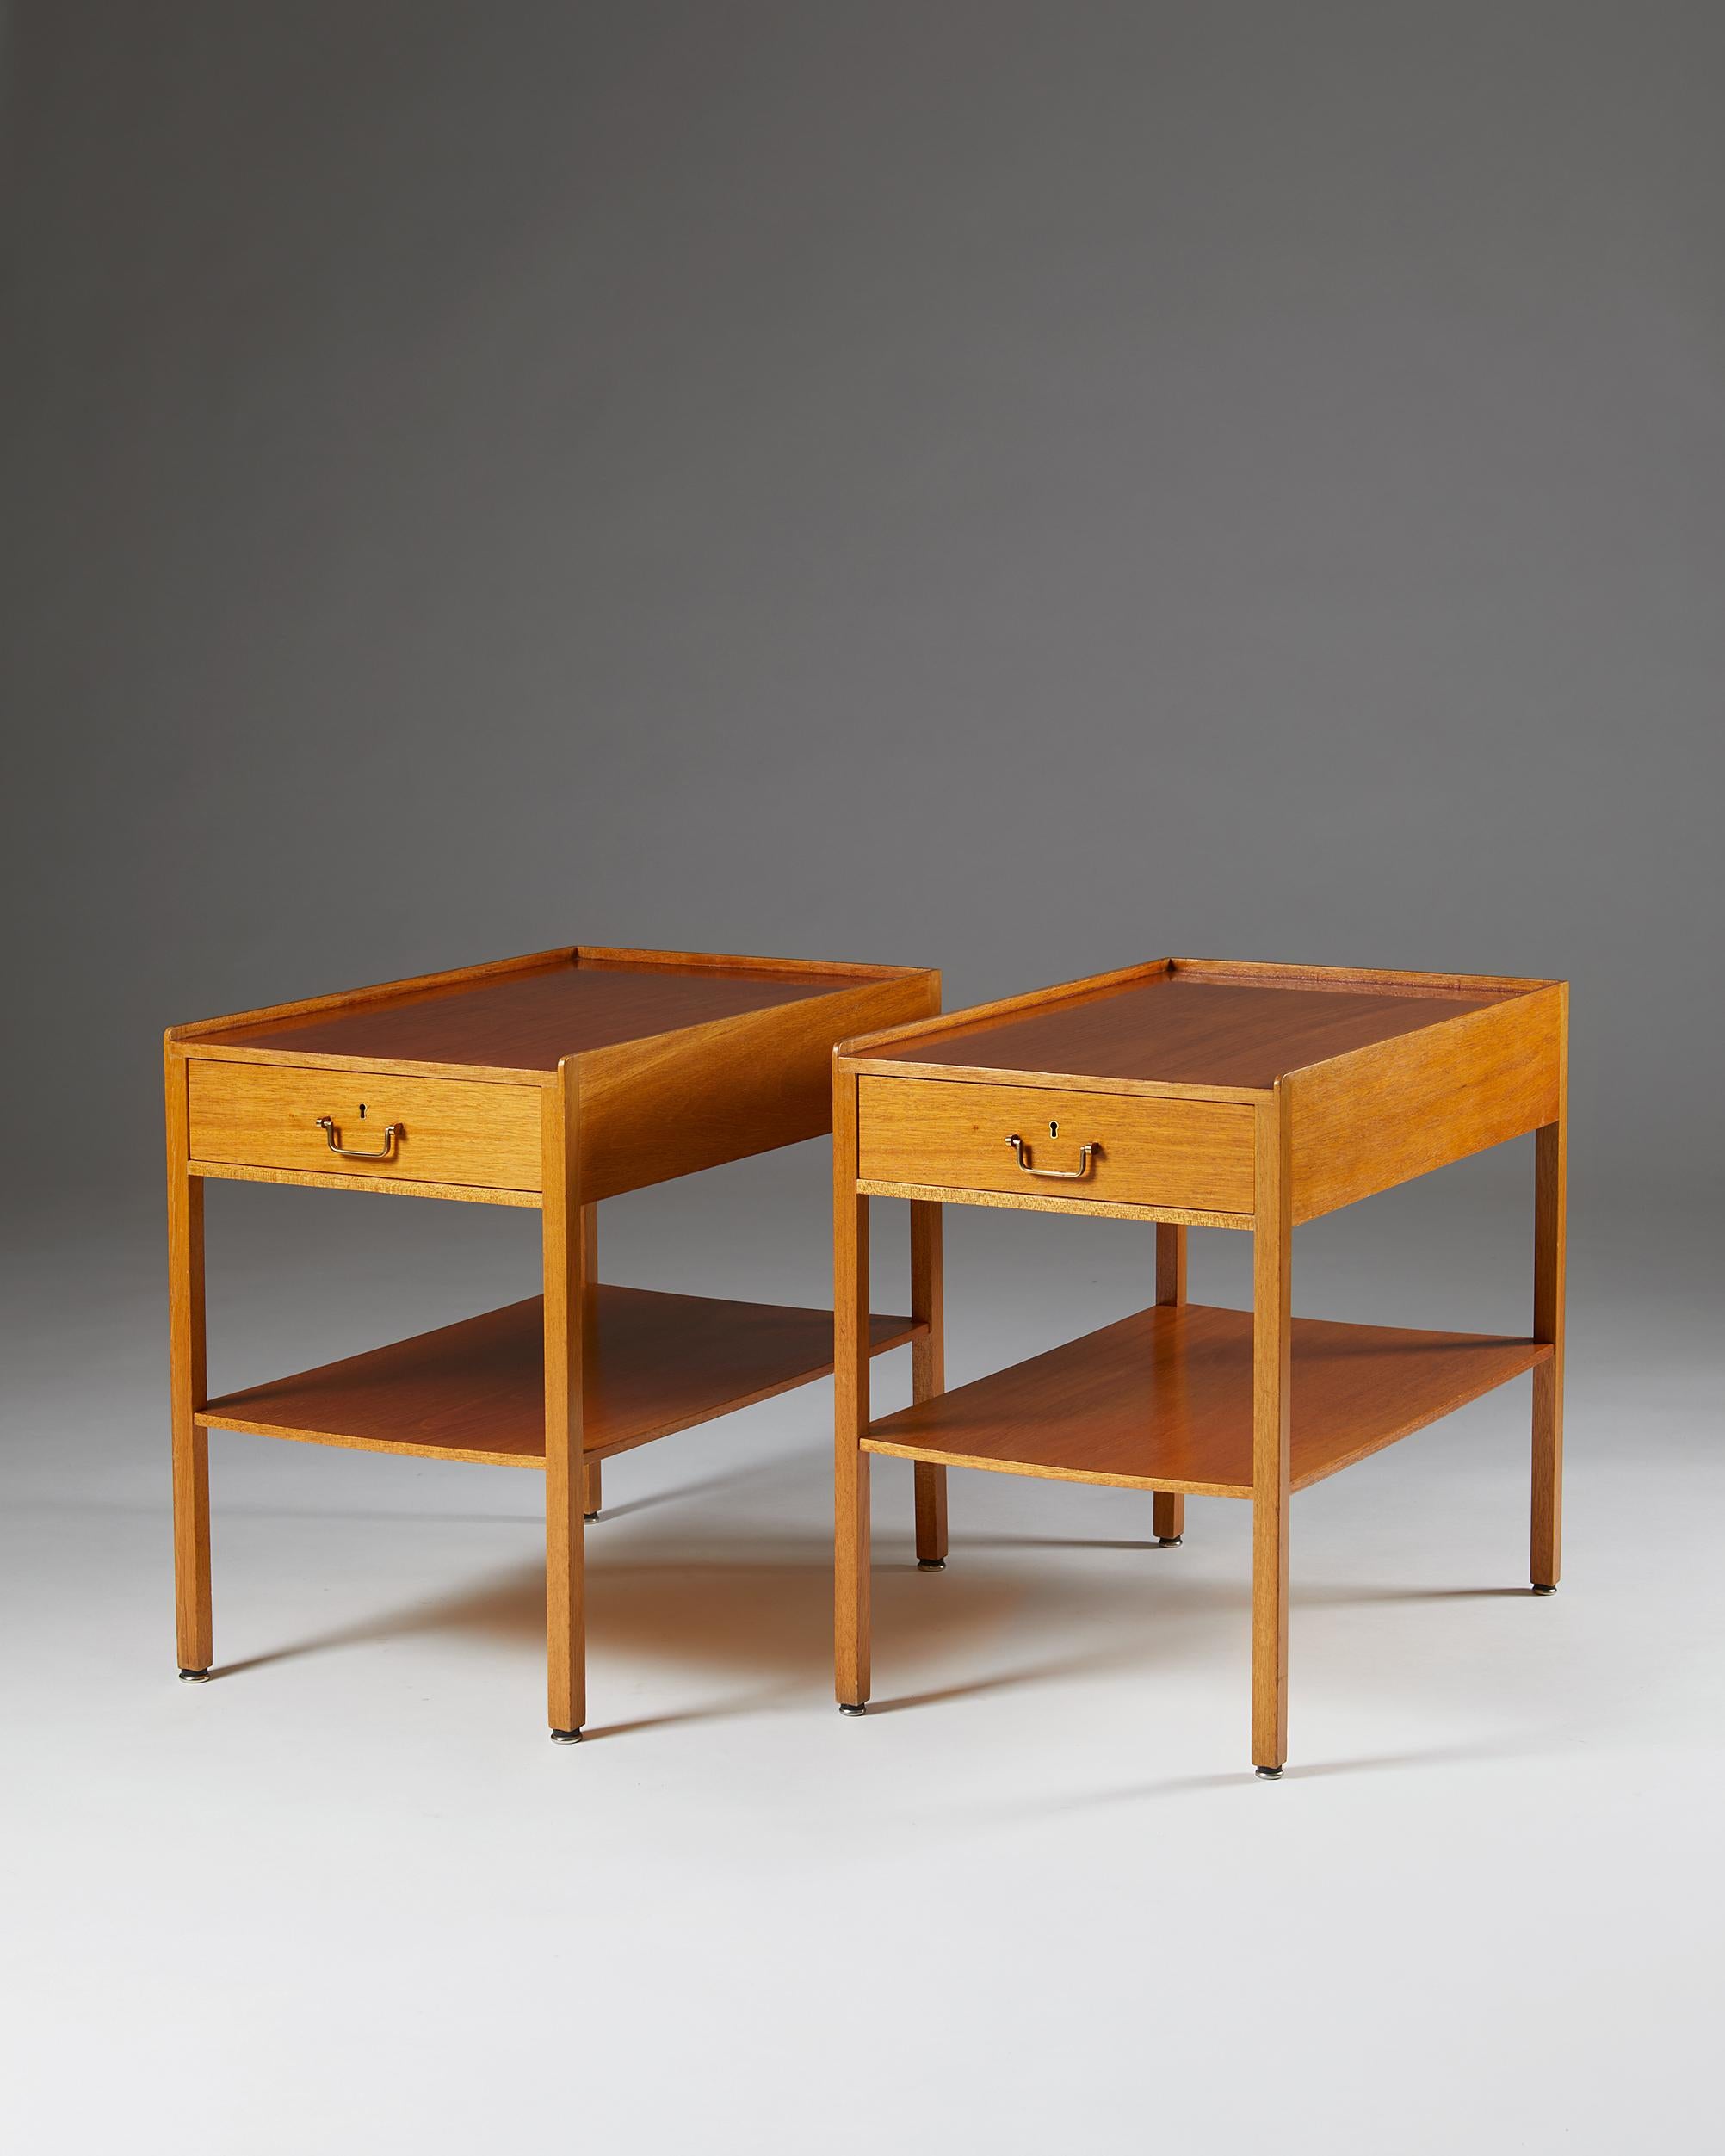 Scandinavian Modern Pair of Bedside Tables Model 914 Designed by Josef Frank for Svenskt Tenn